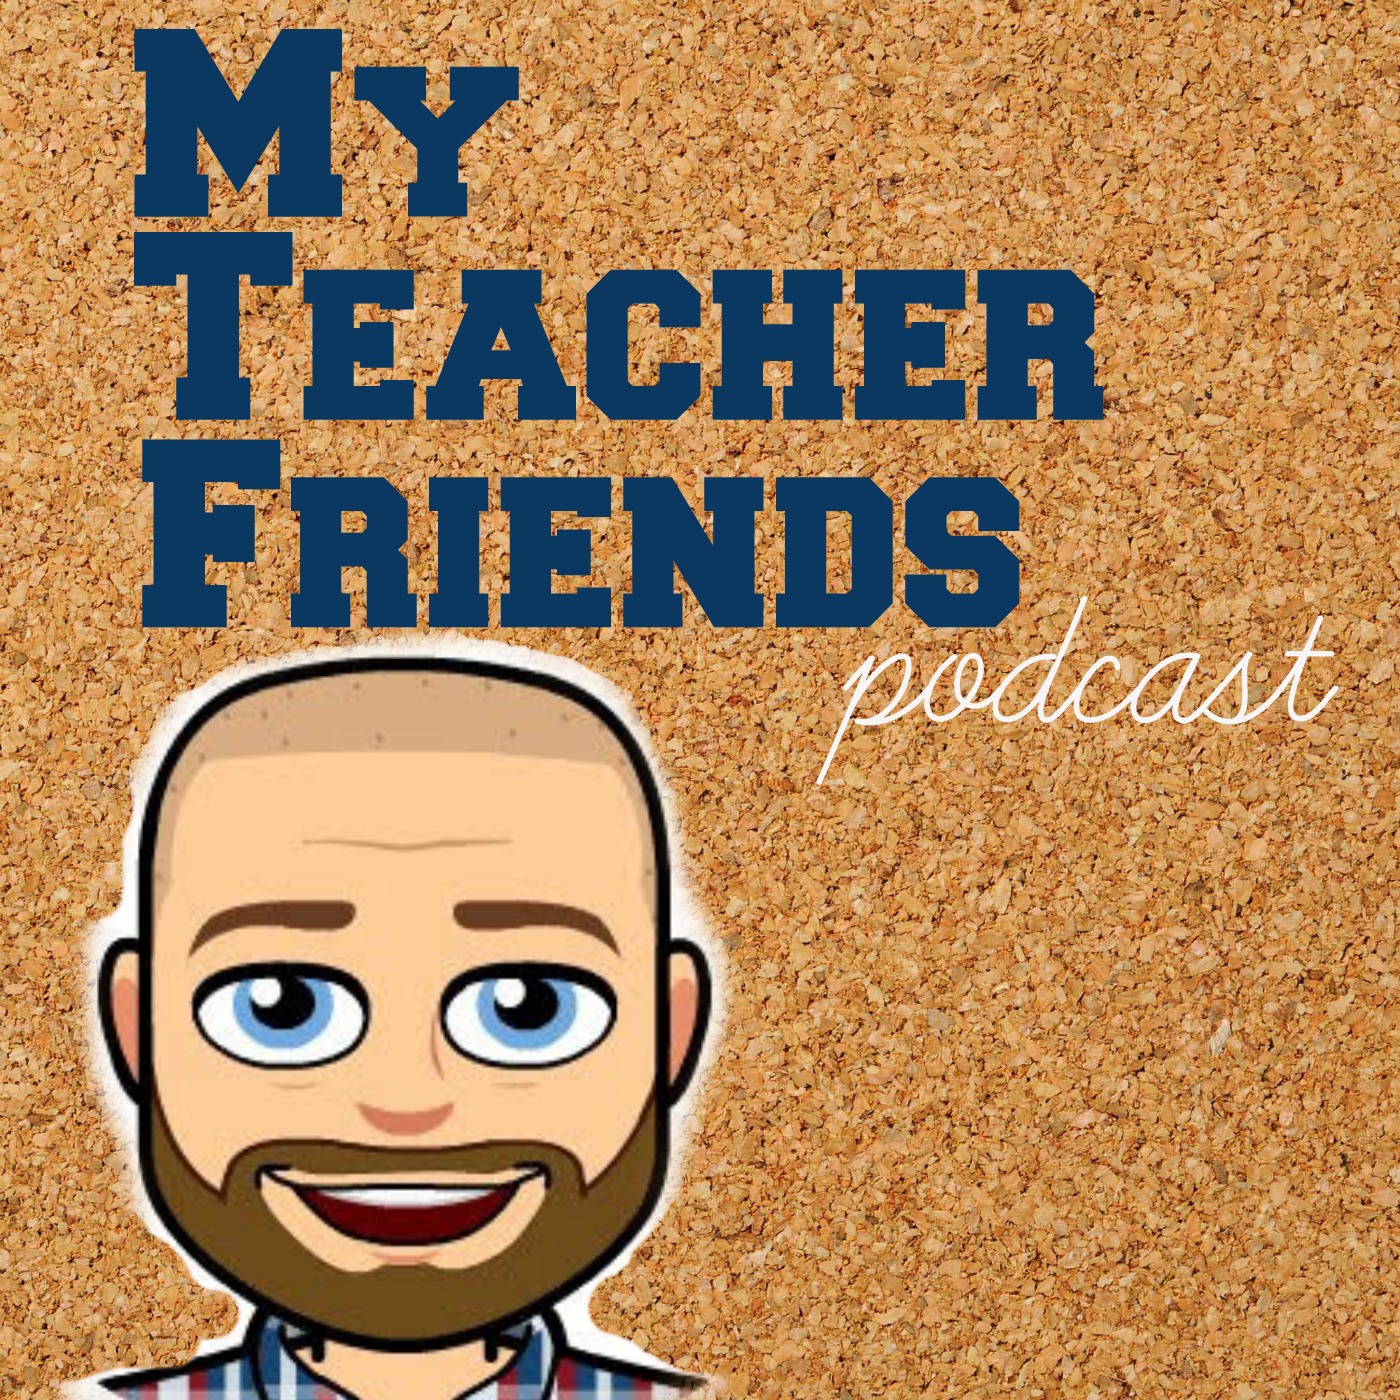 07 - My Teacher Friends Podcast - My Friend Steve